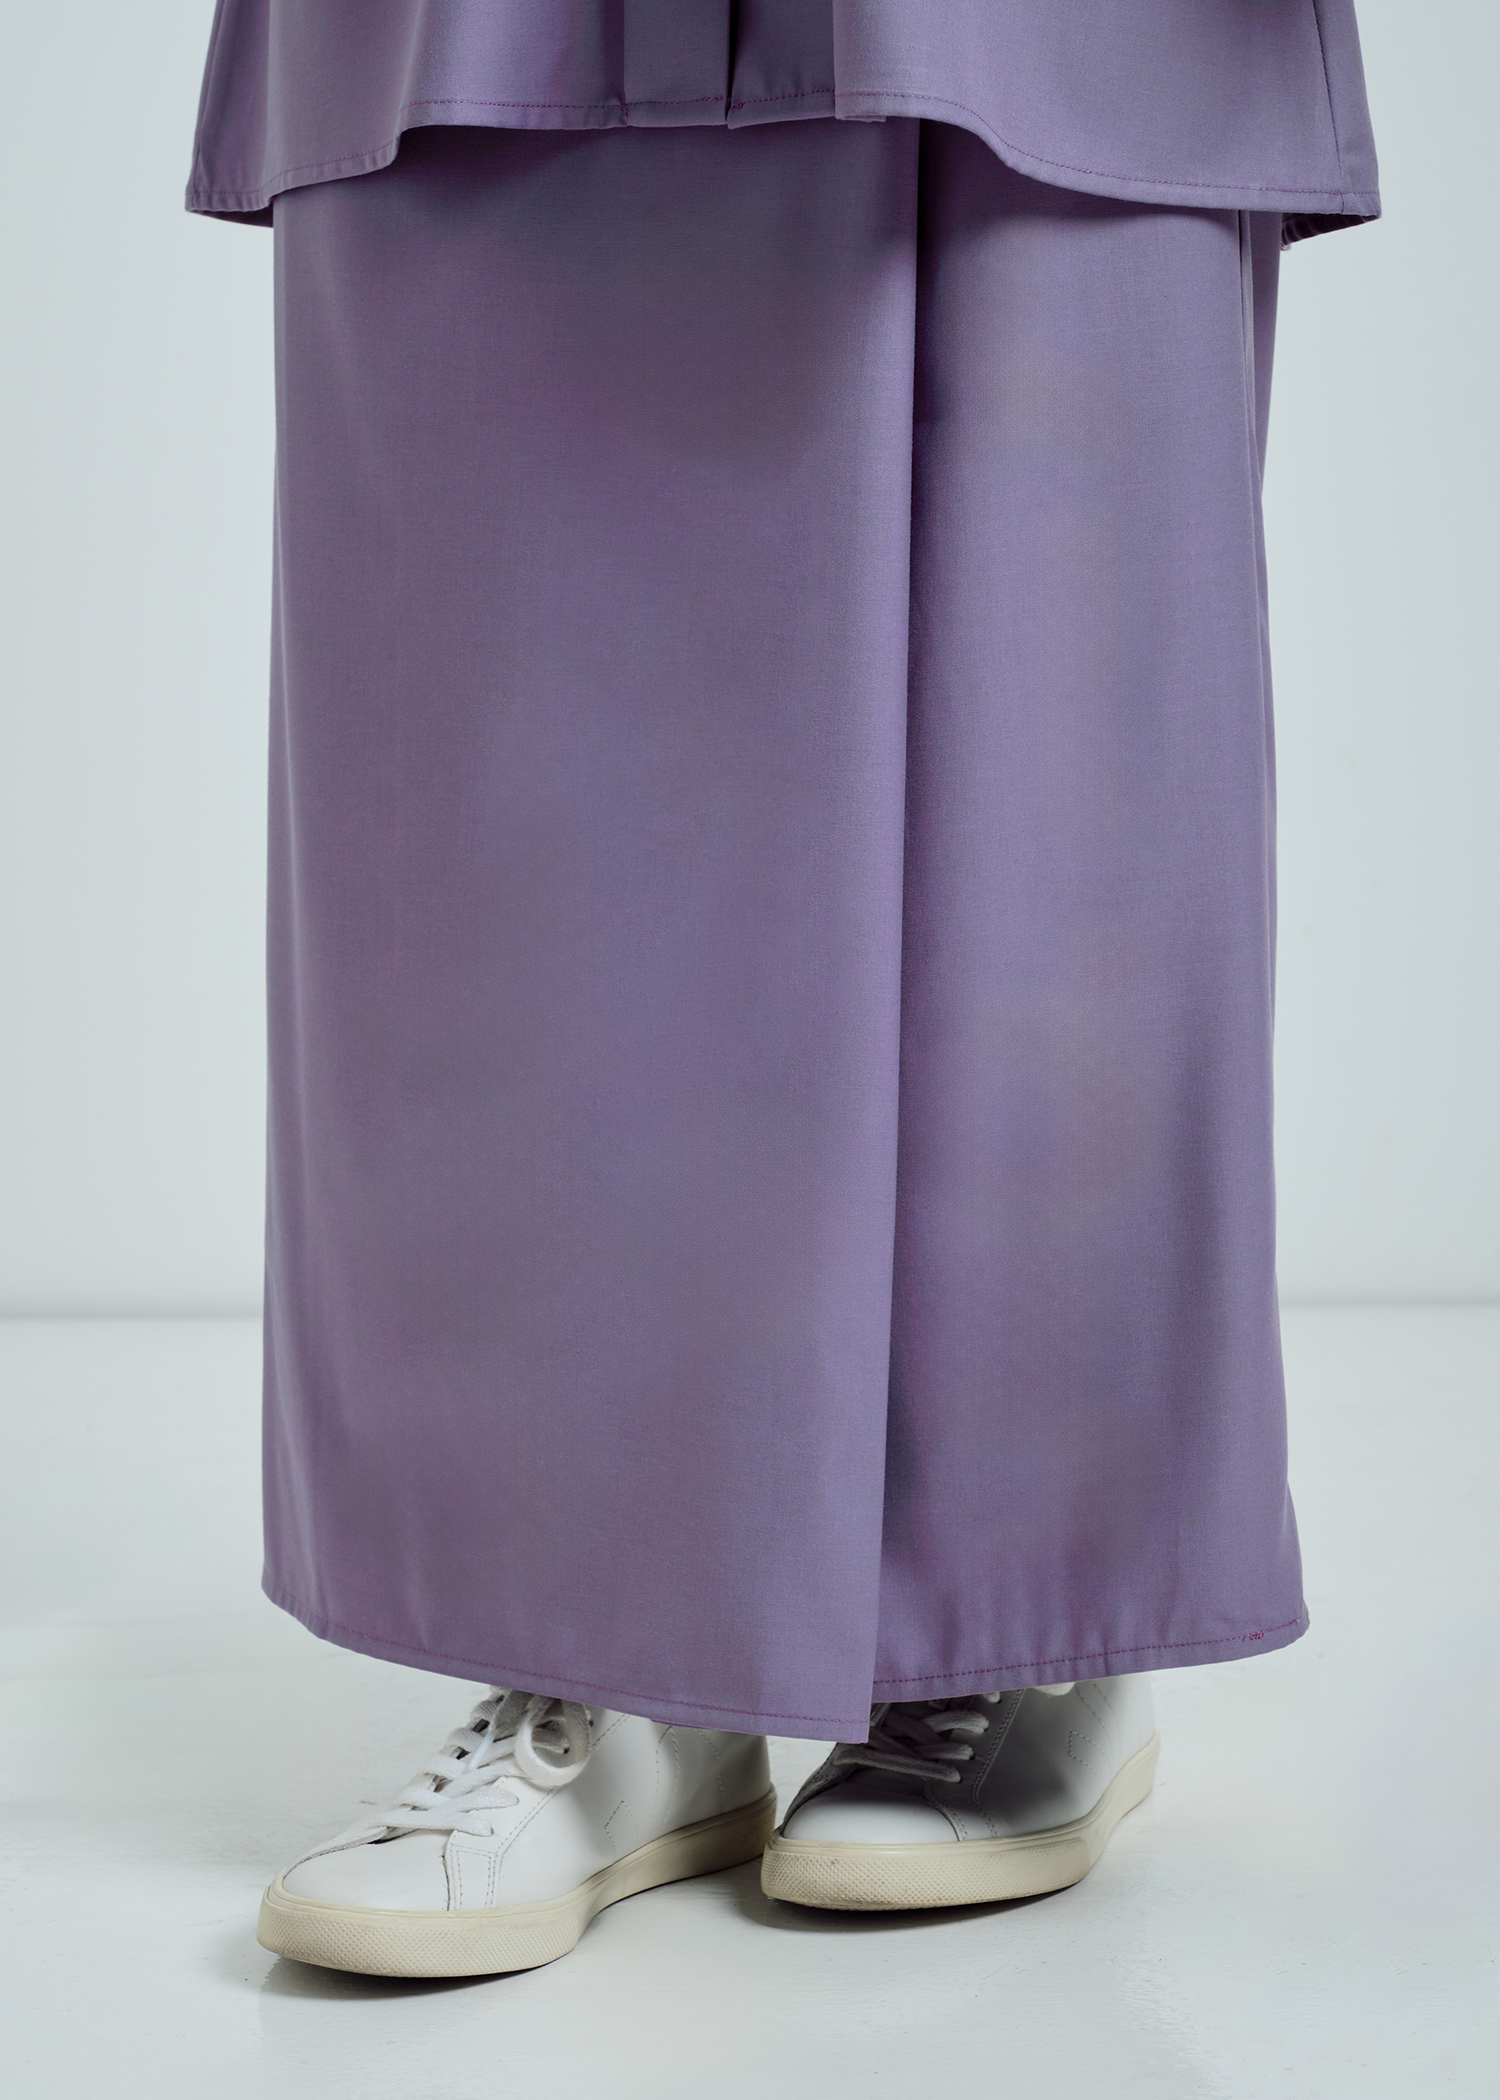 Patawali Baju Kebaya - Dusty Lilac